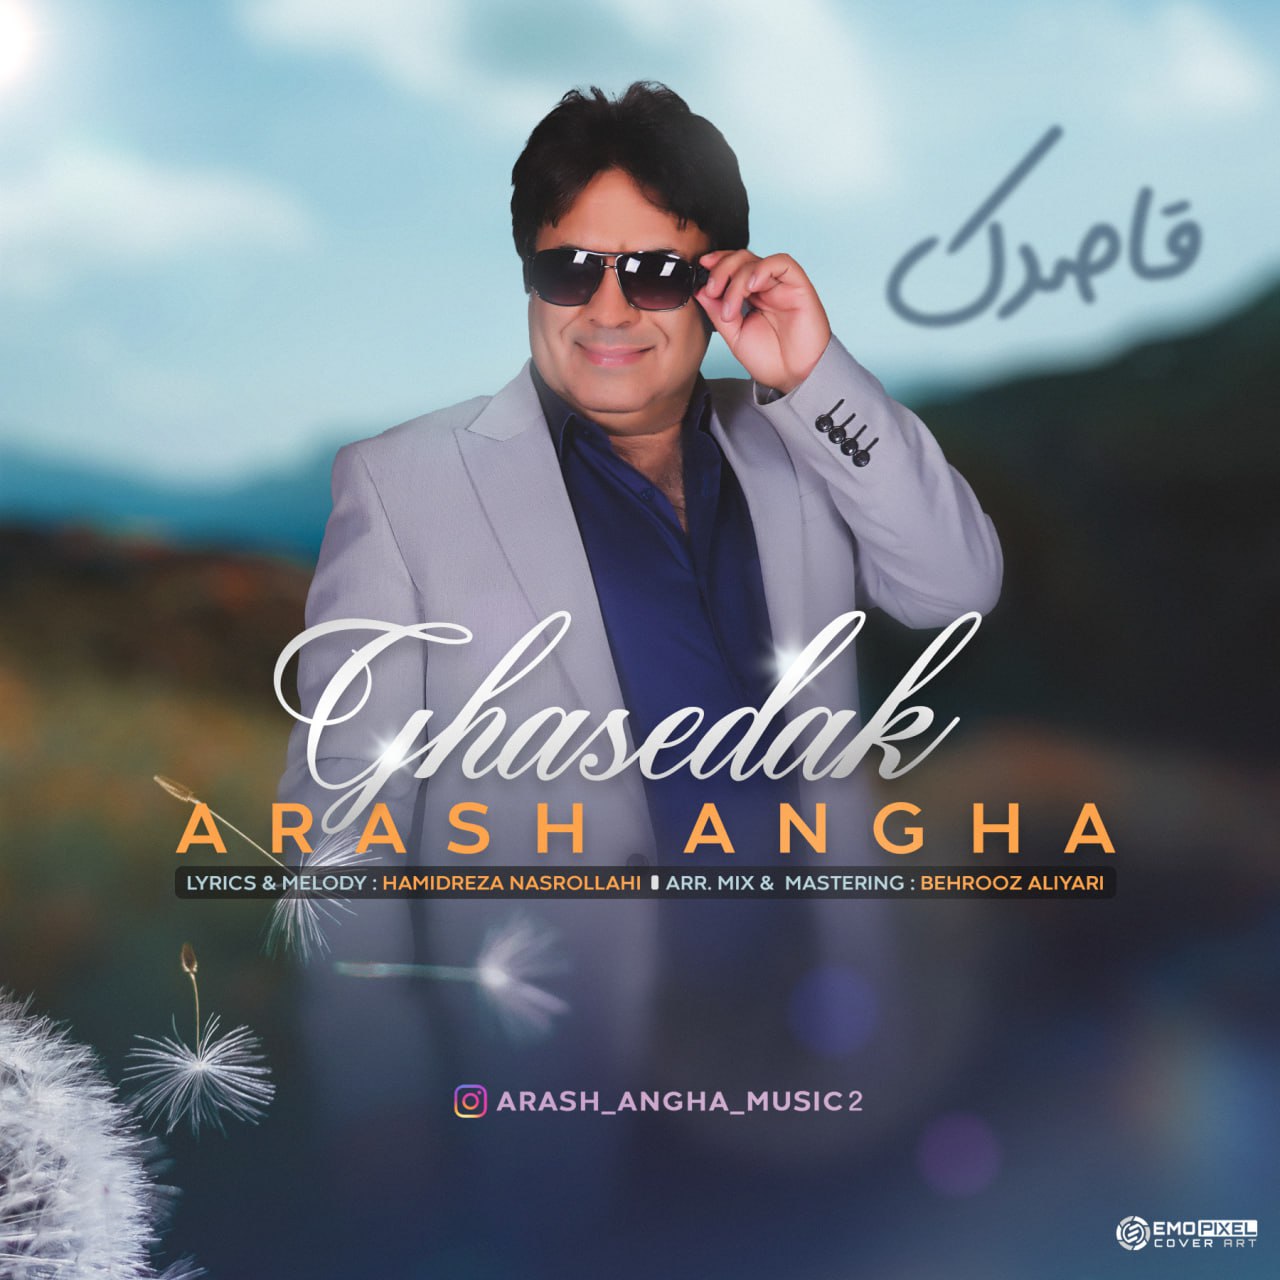 Arash Angha – Ghasedak